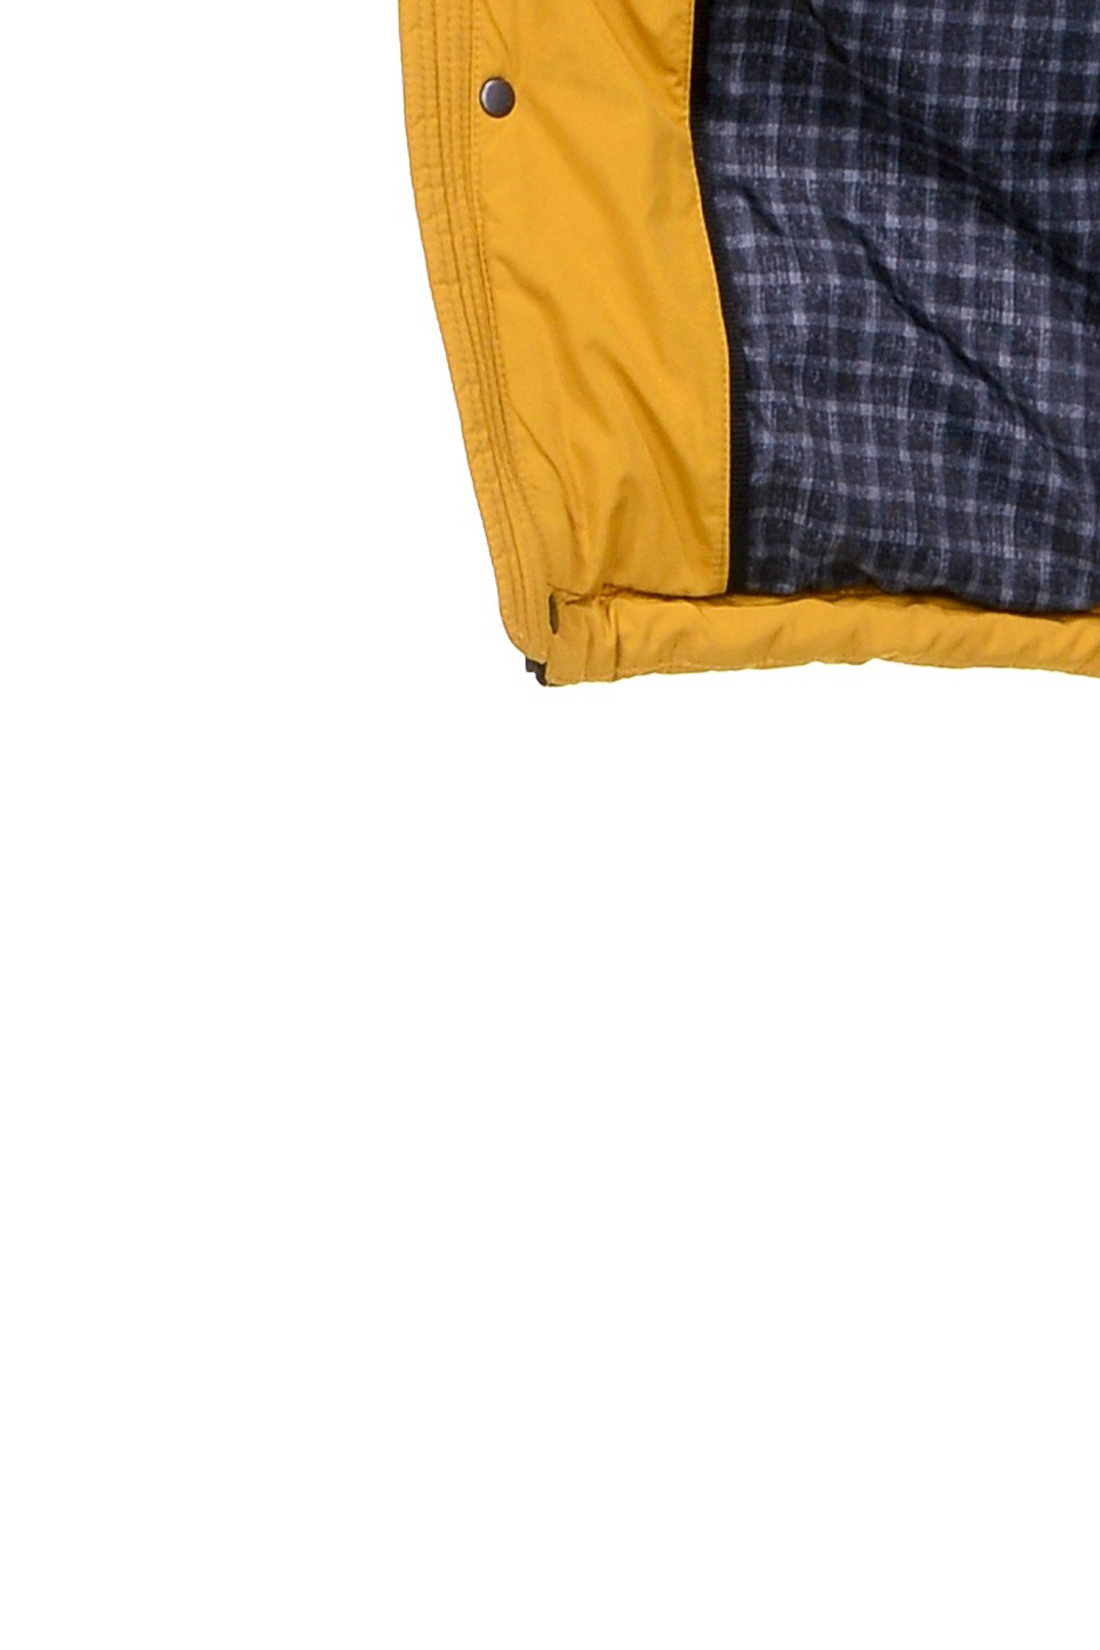 Пуховик с декоративными стежками (арт. baon B509505), размер XL, цвет желтый Пуховик с декоративными стежками (арт. baon B509505) - фото 3